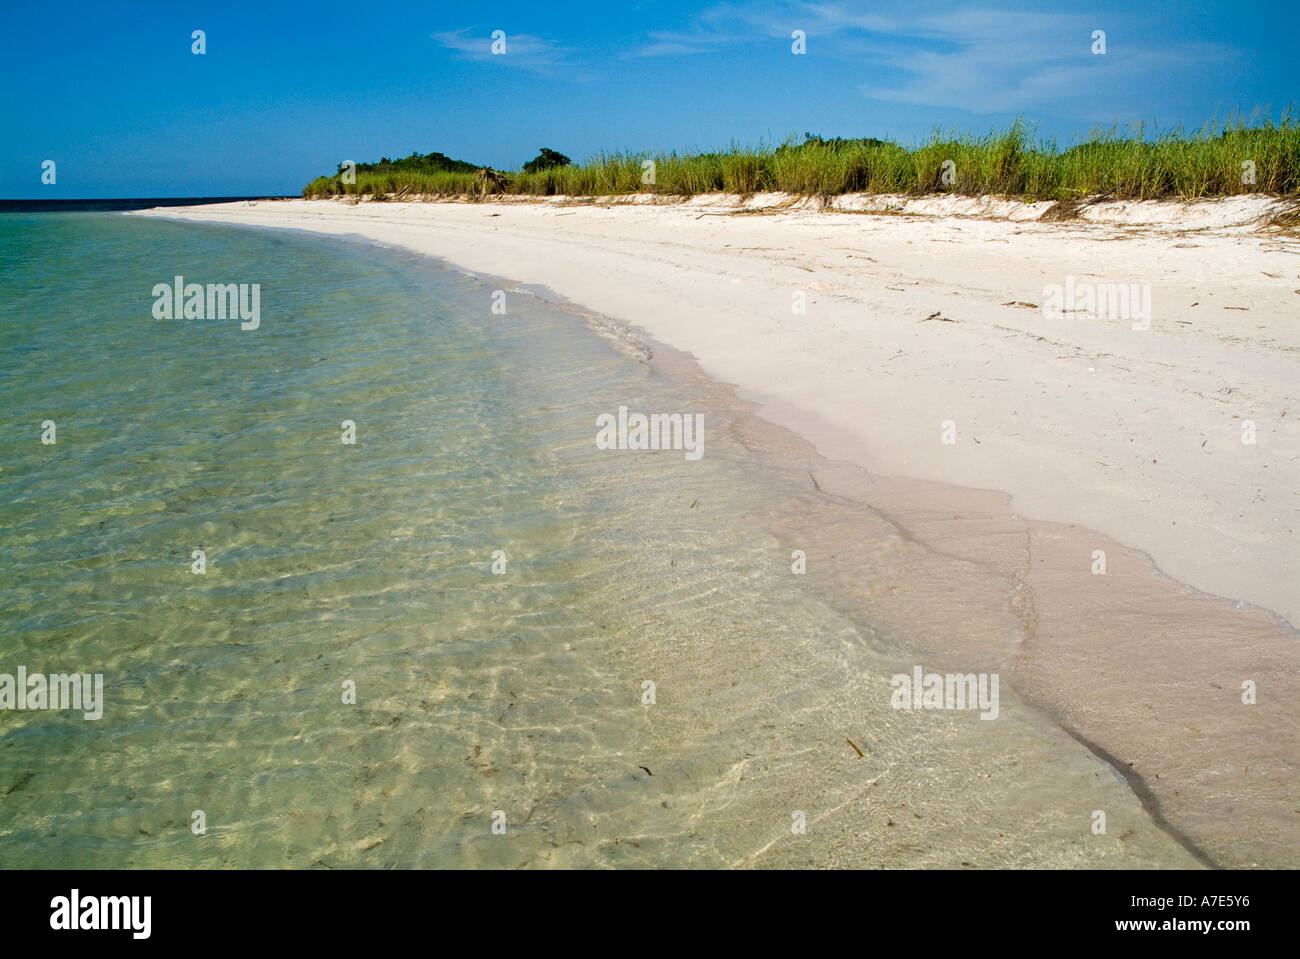 Transparent water and white sandy beach, Cayo Jutias, Cuba. Stock Photo